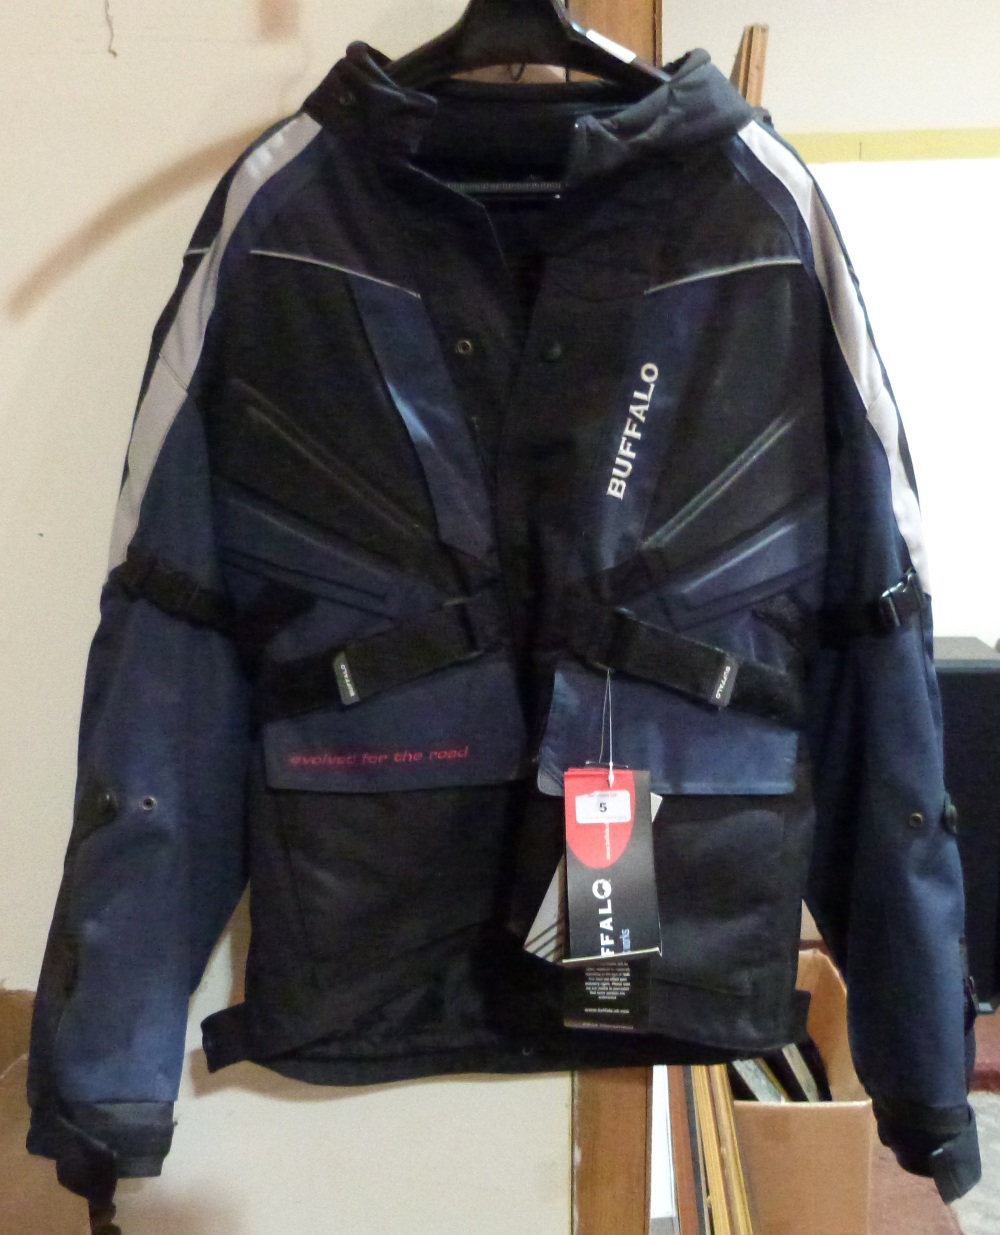 A motorcycle jacket. Size L